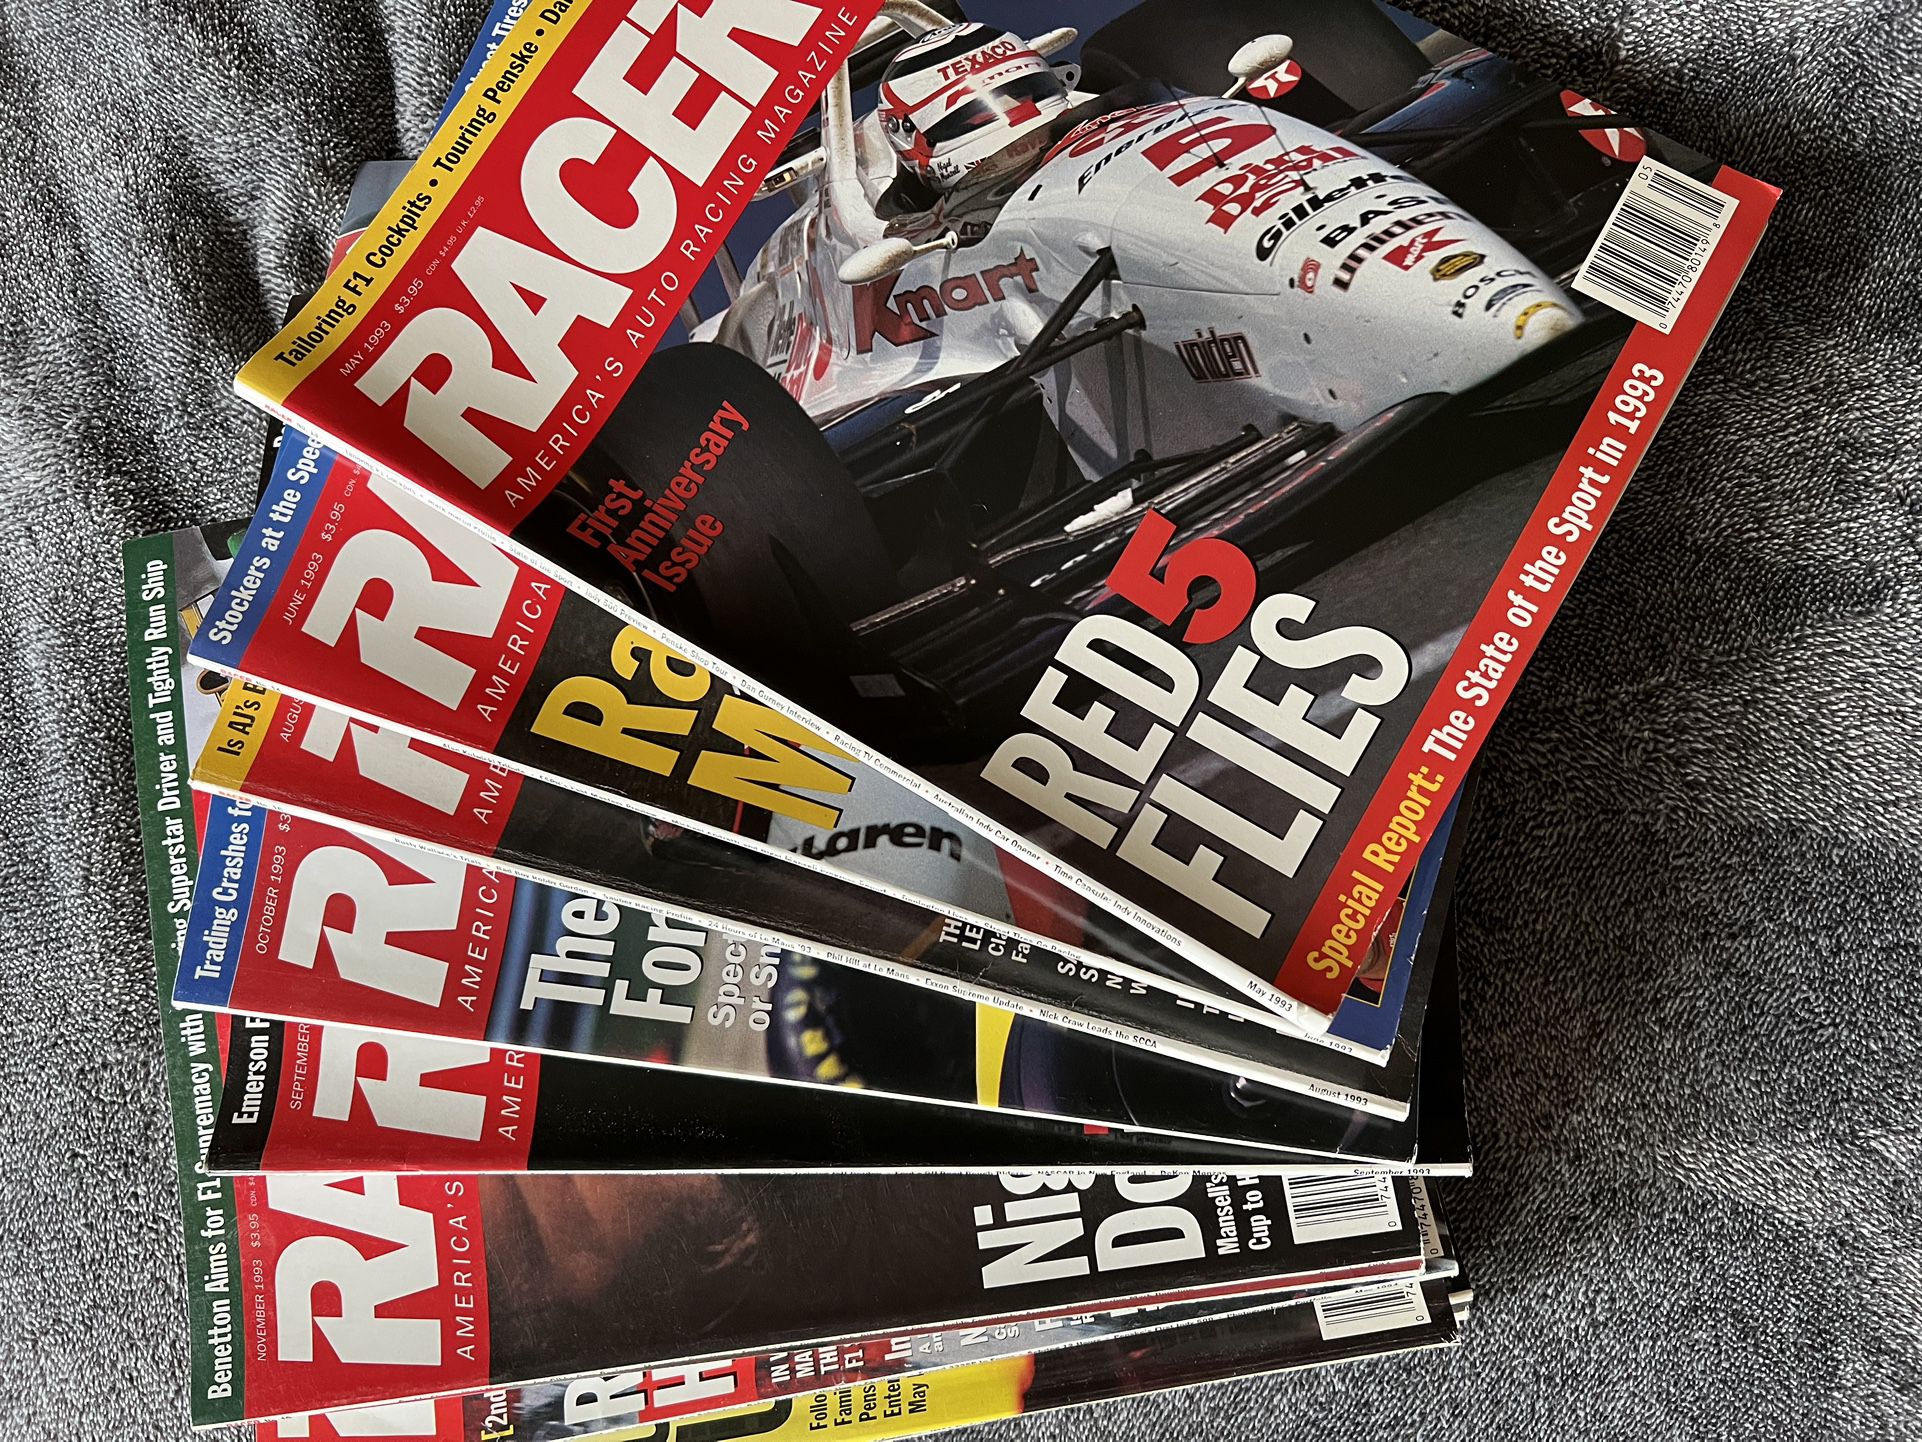 Vintage Racer Magazines 